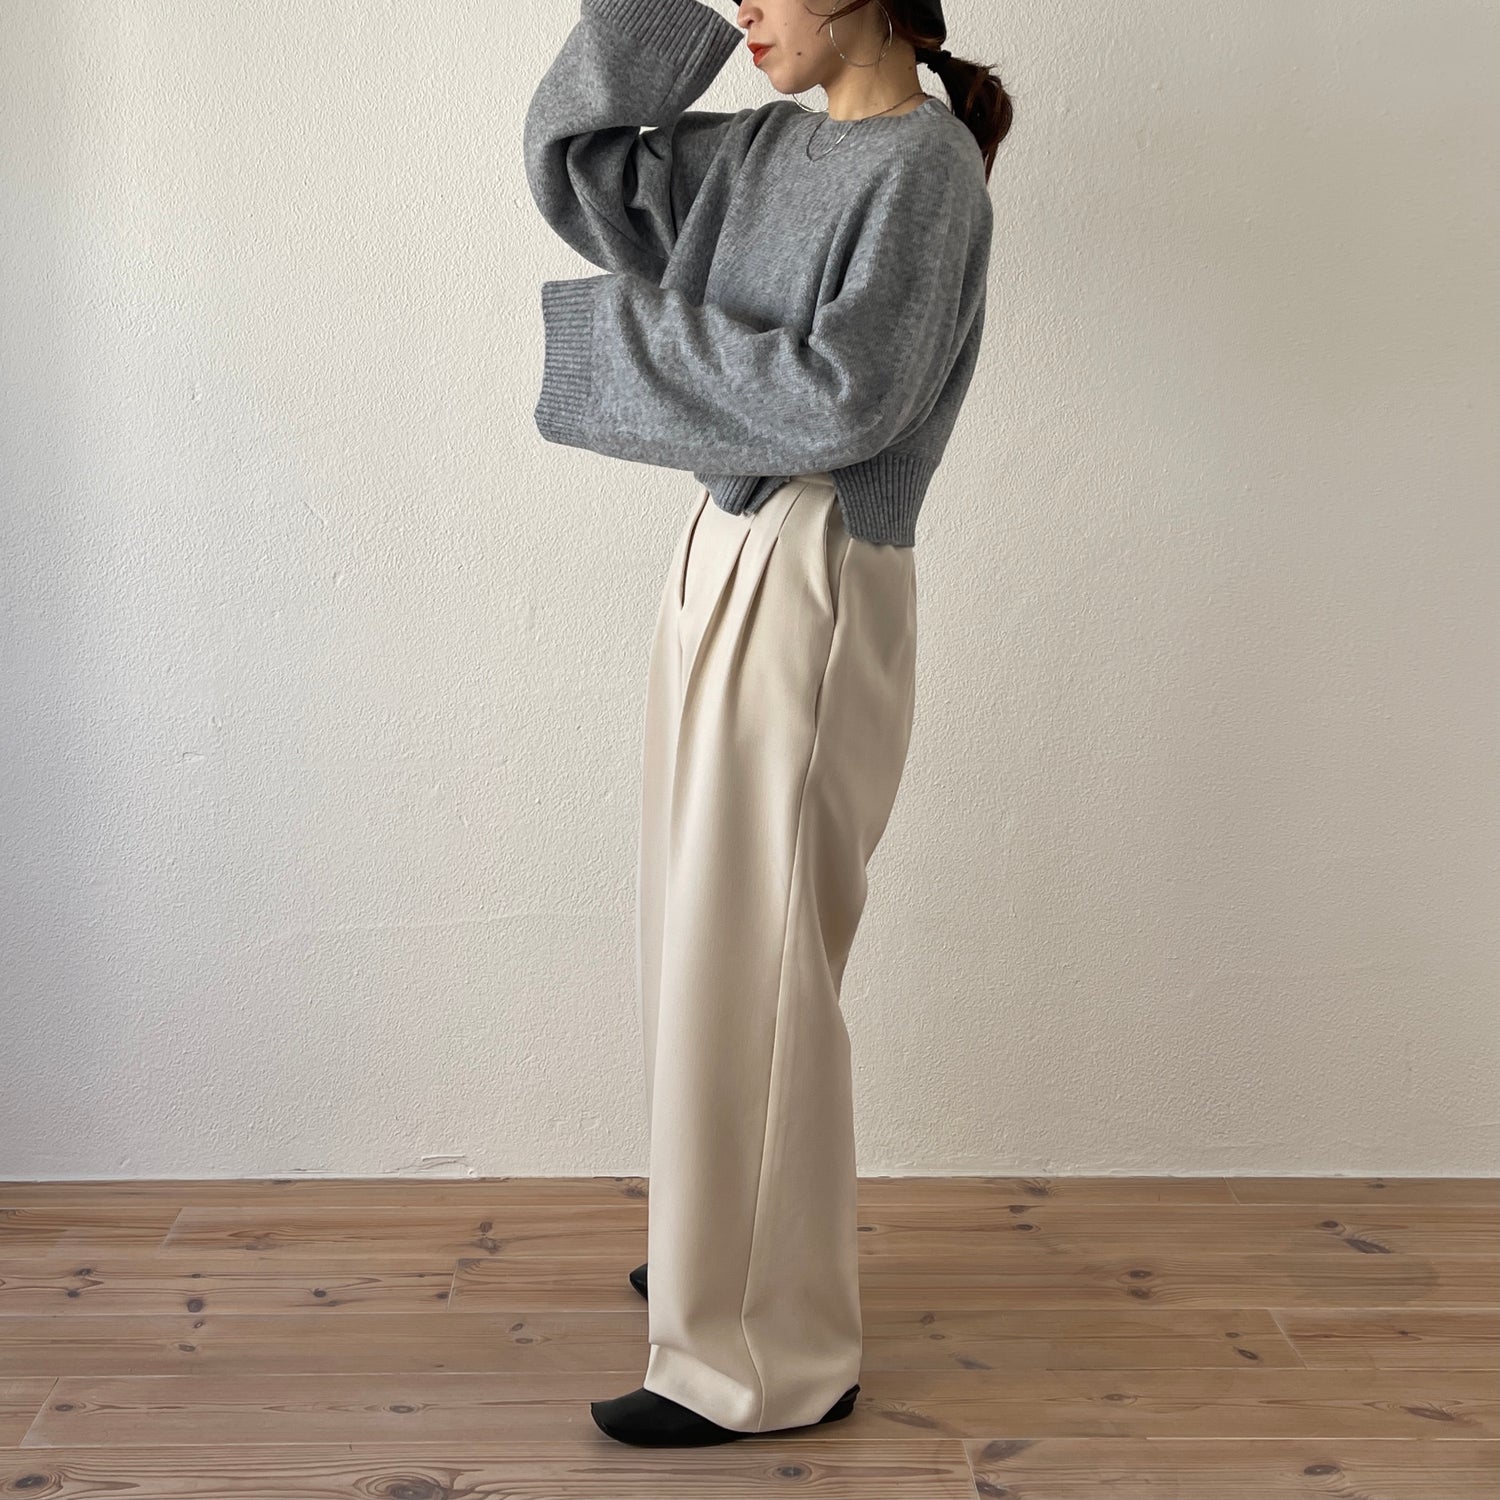 wide sleeve short knit / gray